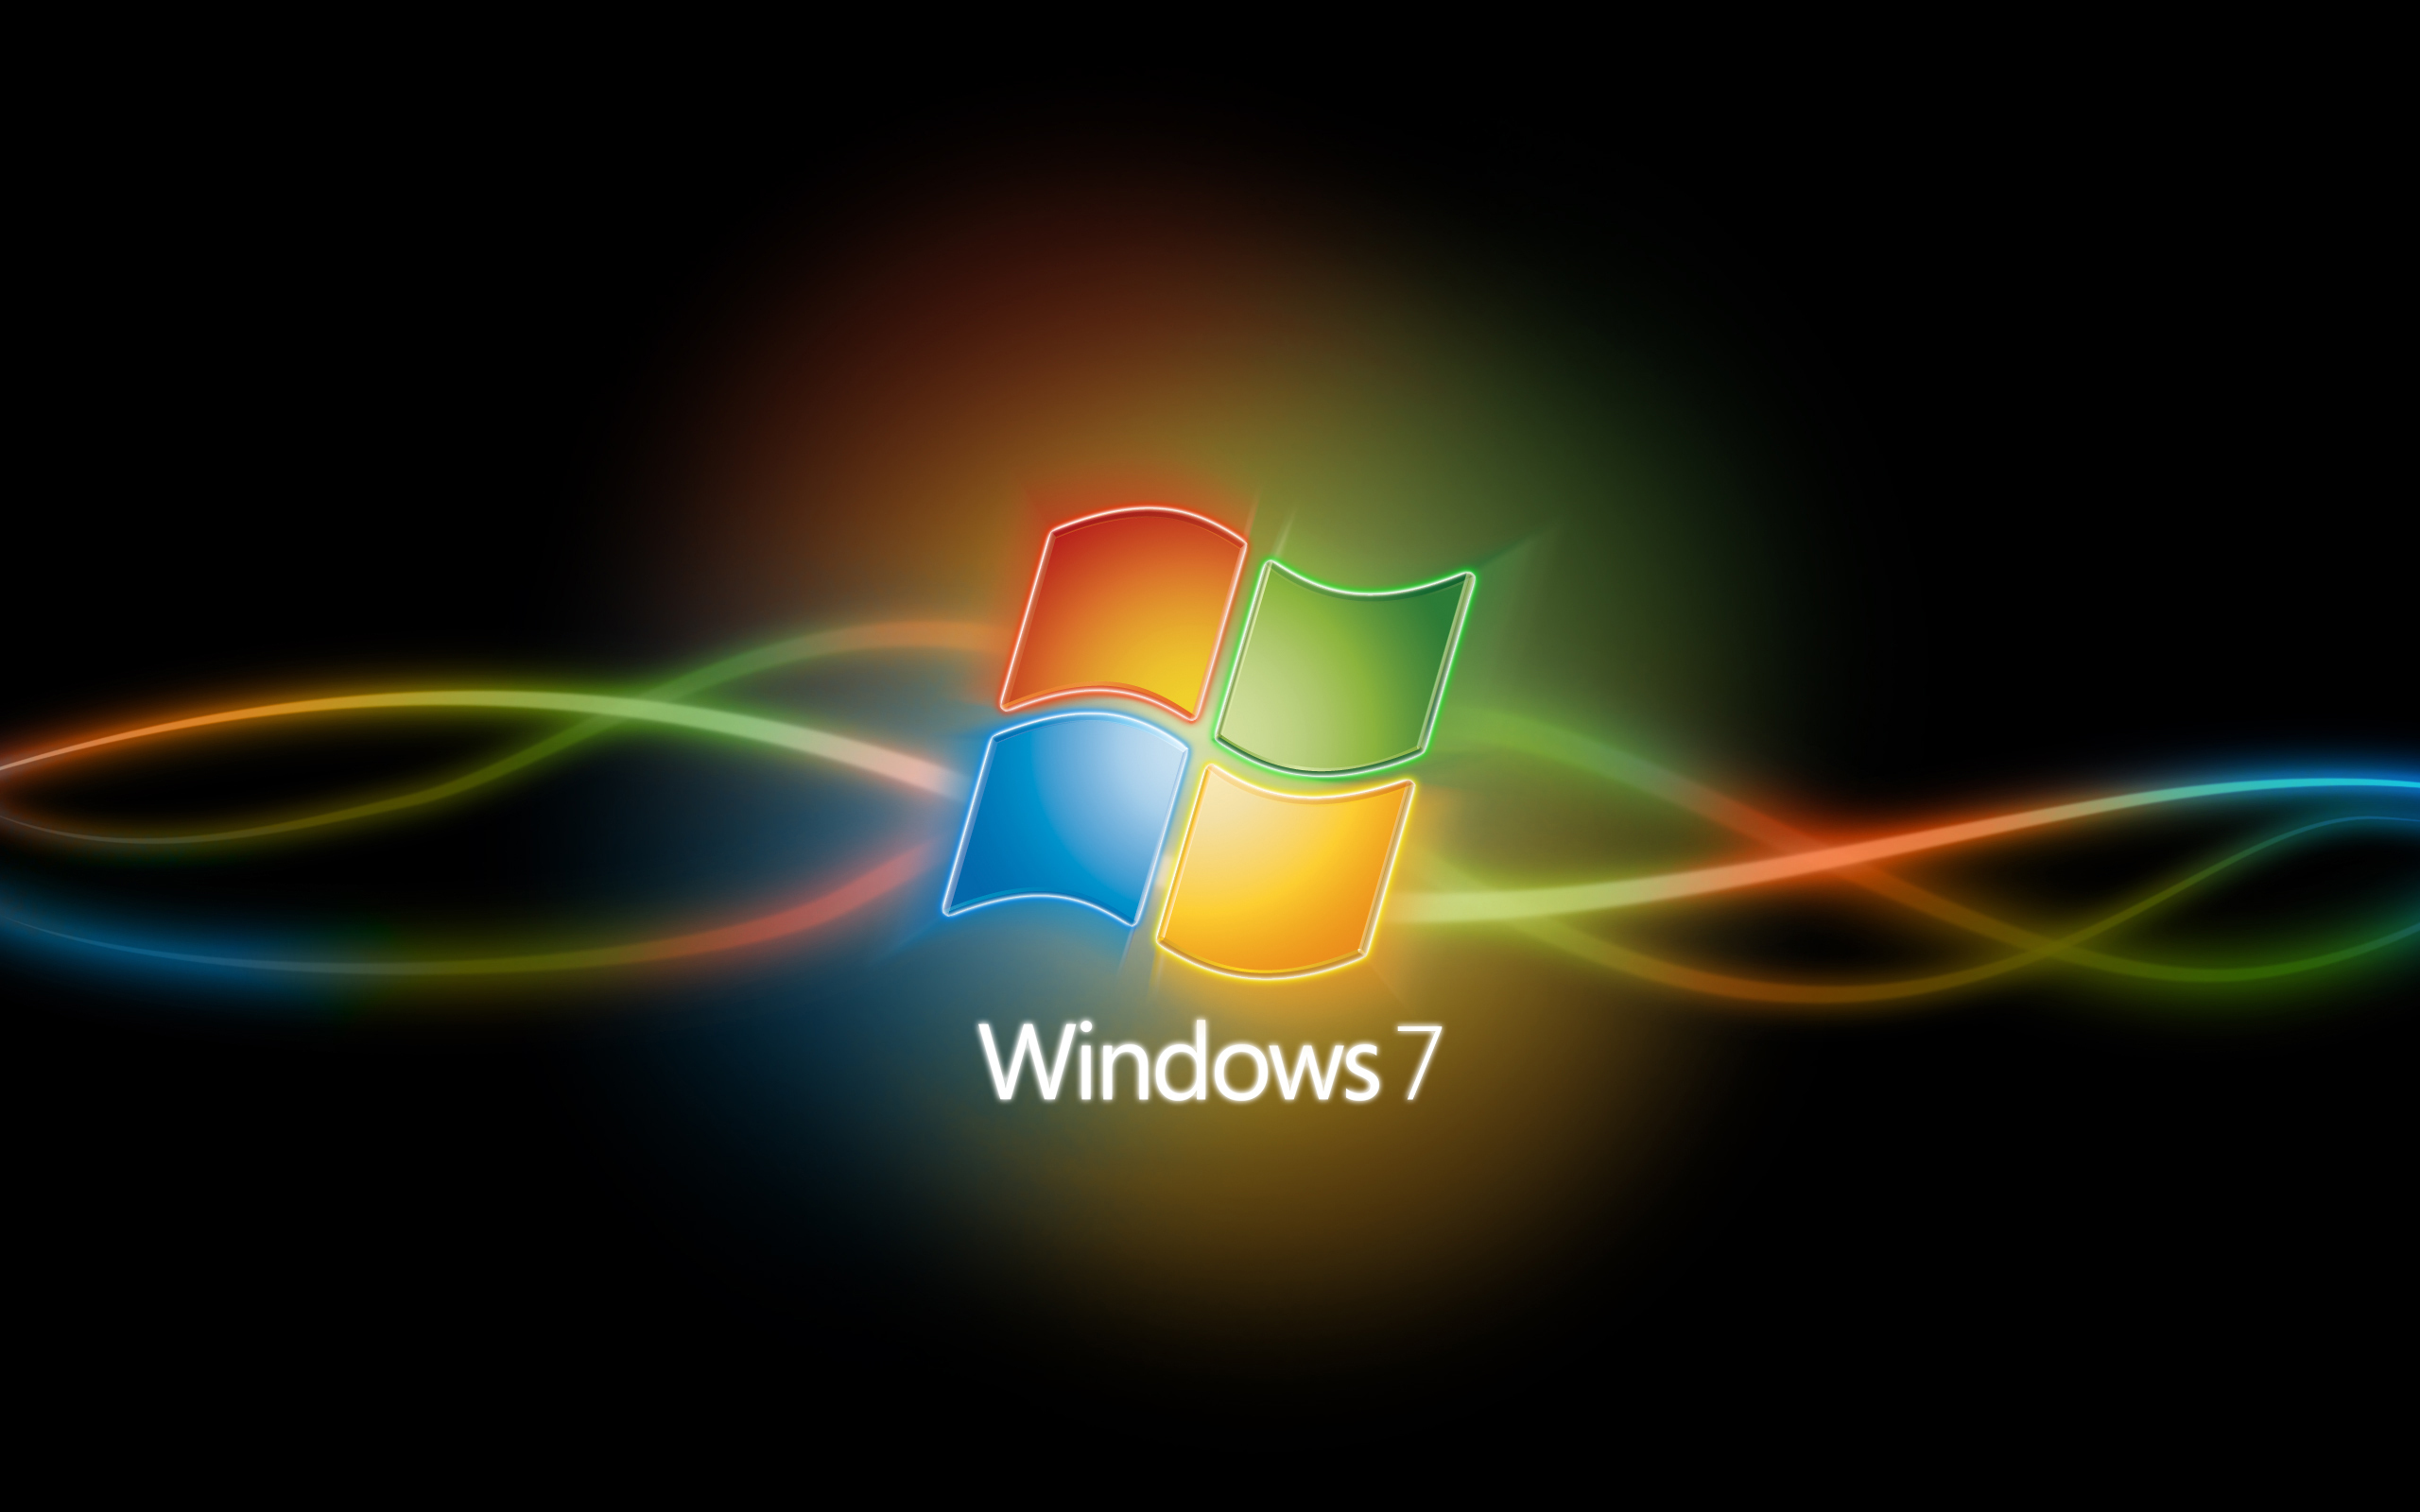 windows 7, windows, microsoft, logo, technology